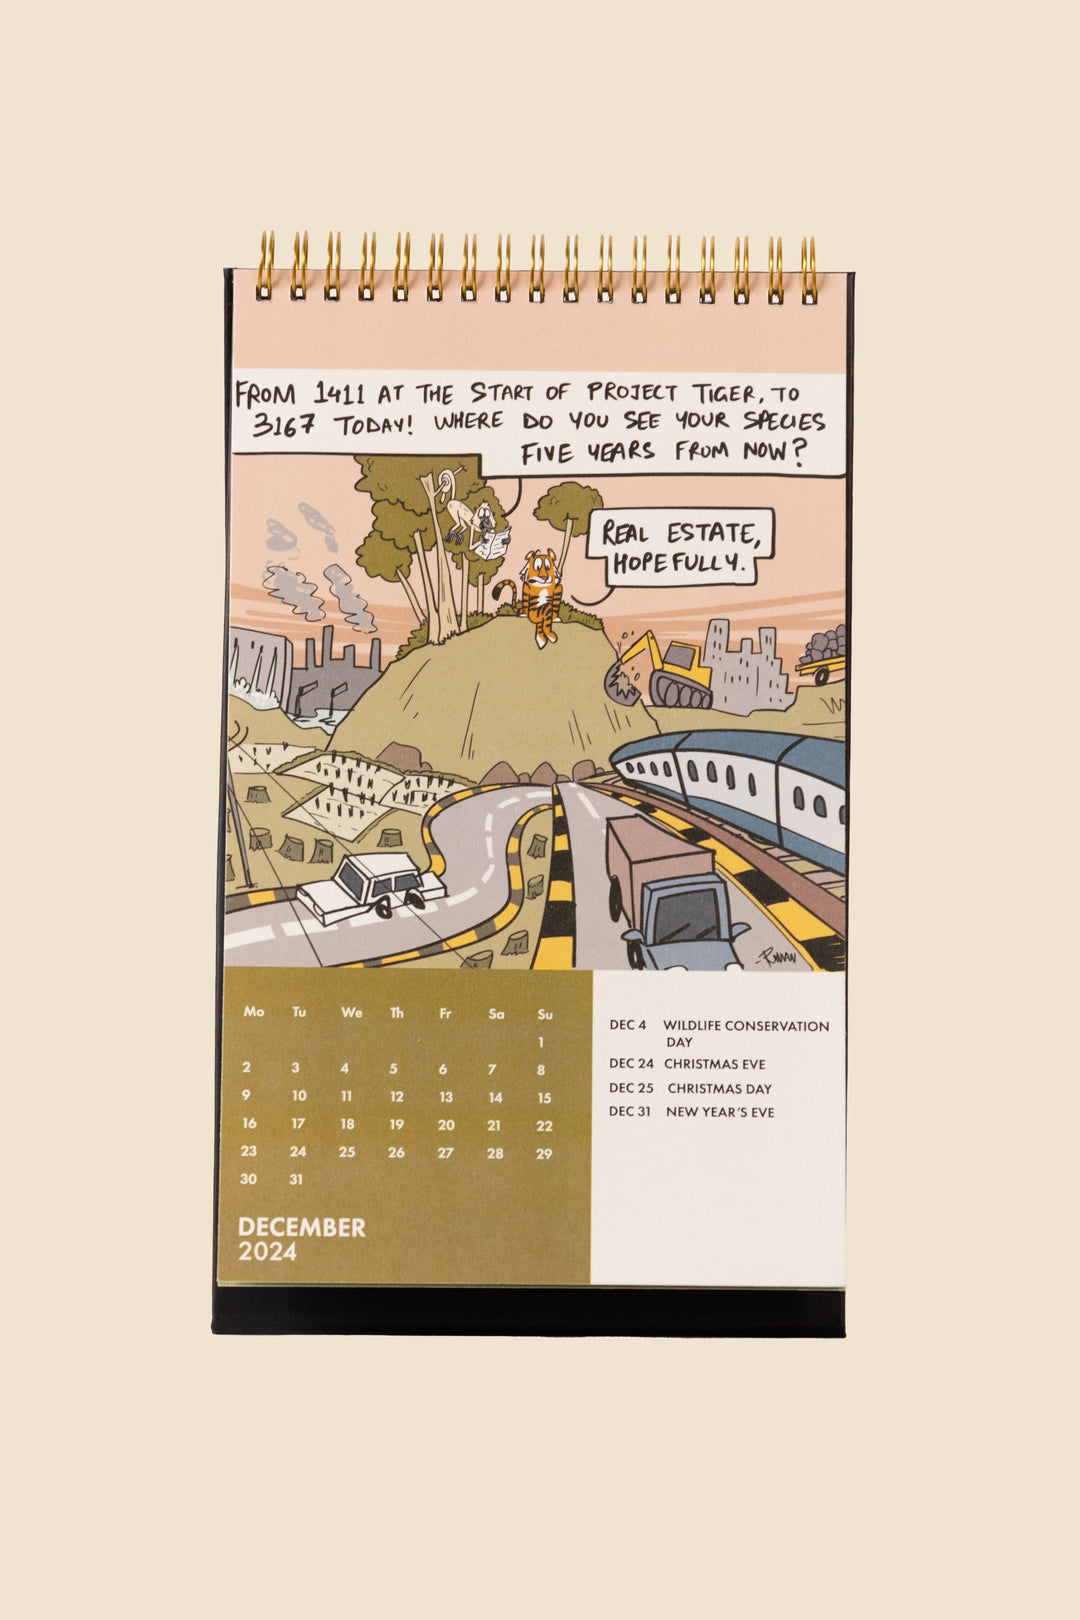 2024 A Tiger's India Desk Calendar